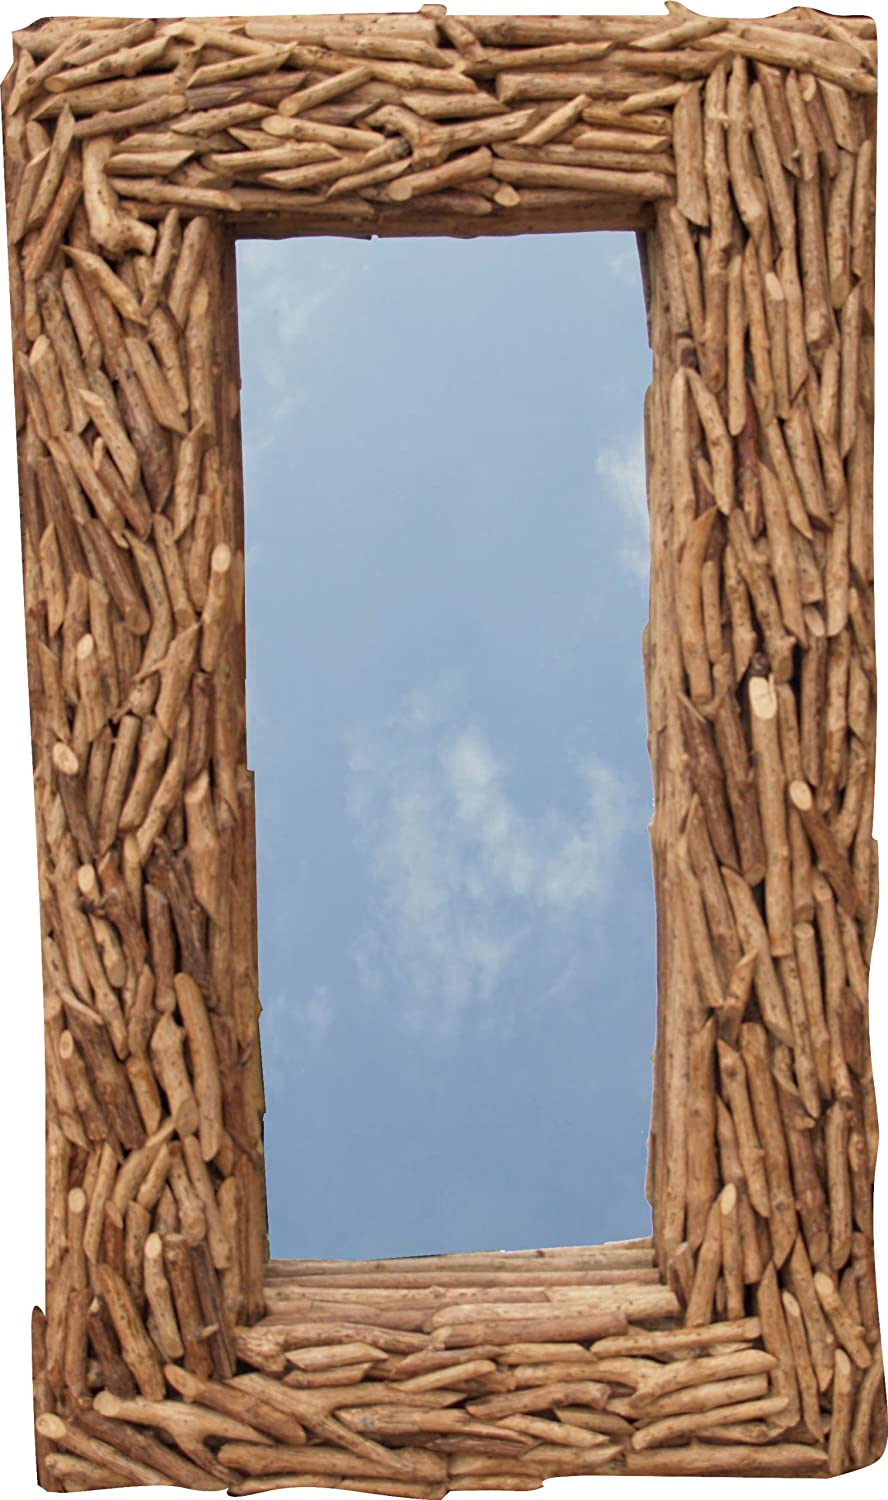 GURU SHOP Driftgut Mirror, Decorative Mirror with Driftwood Pieces in Frame, 90 x 50 cm, Wall Mirror, Brown